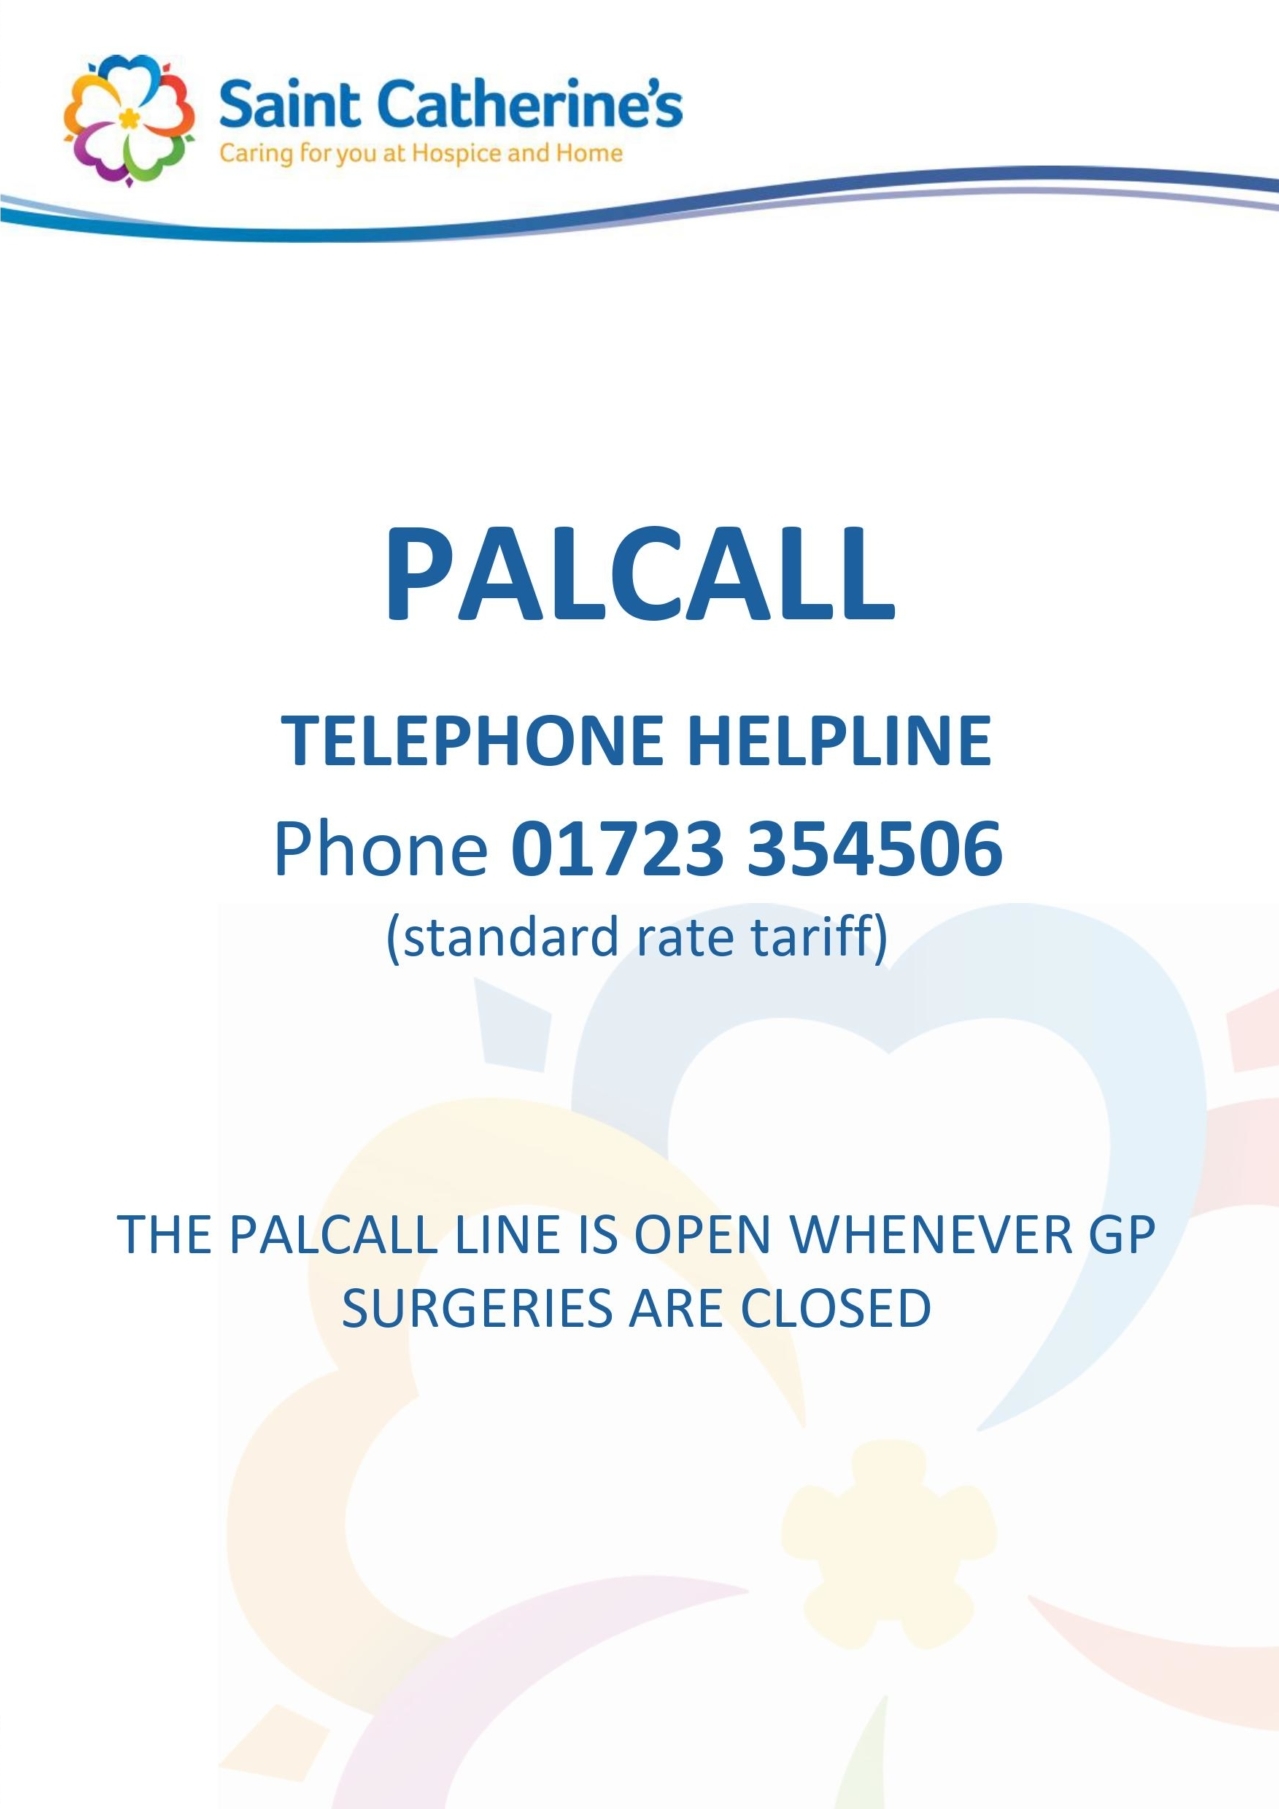 palcall information leaflet